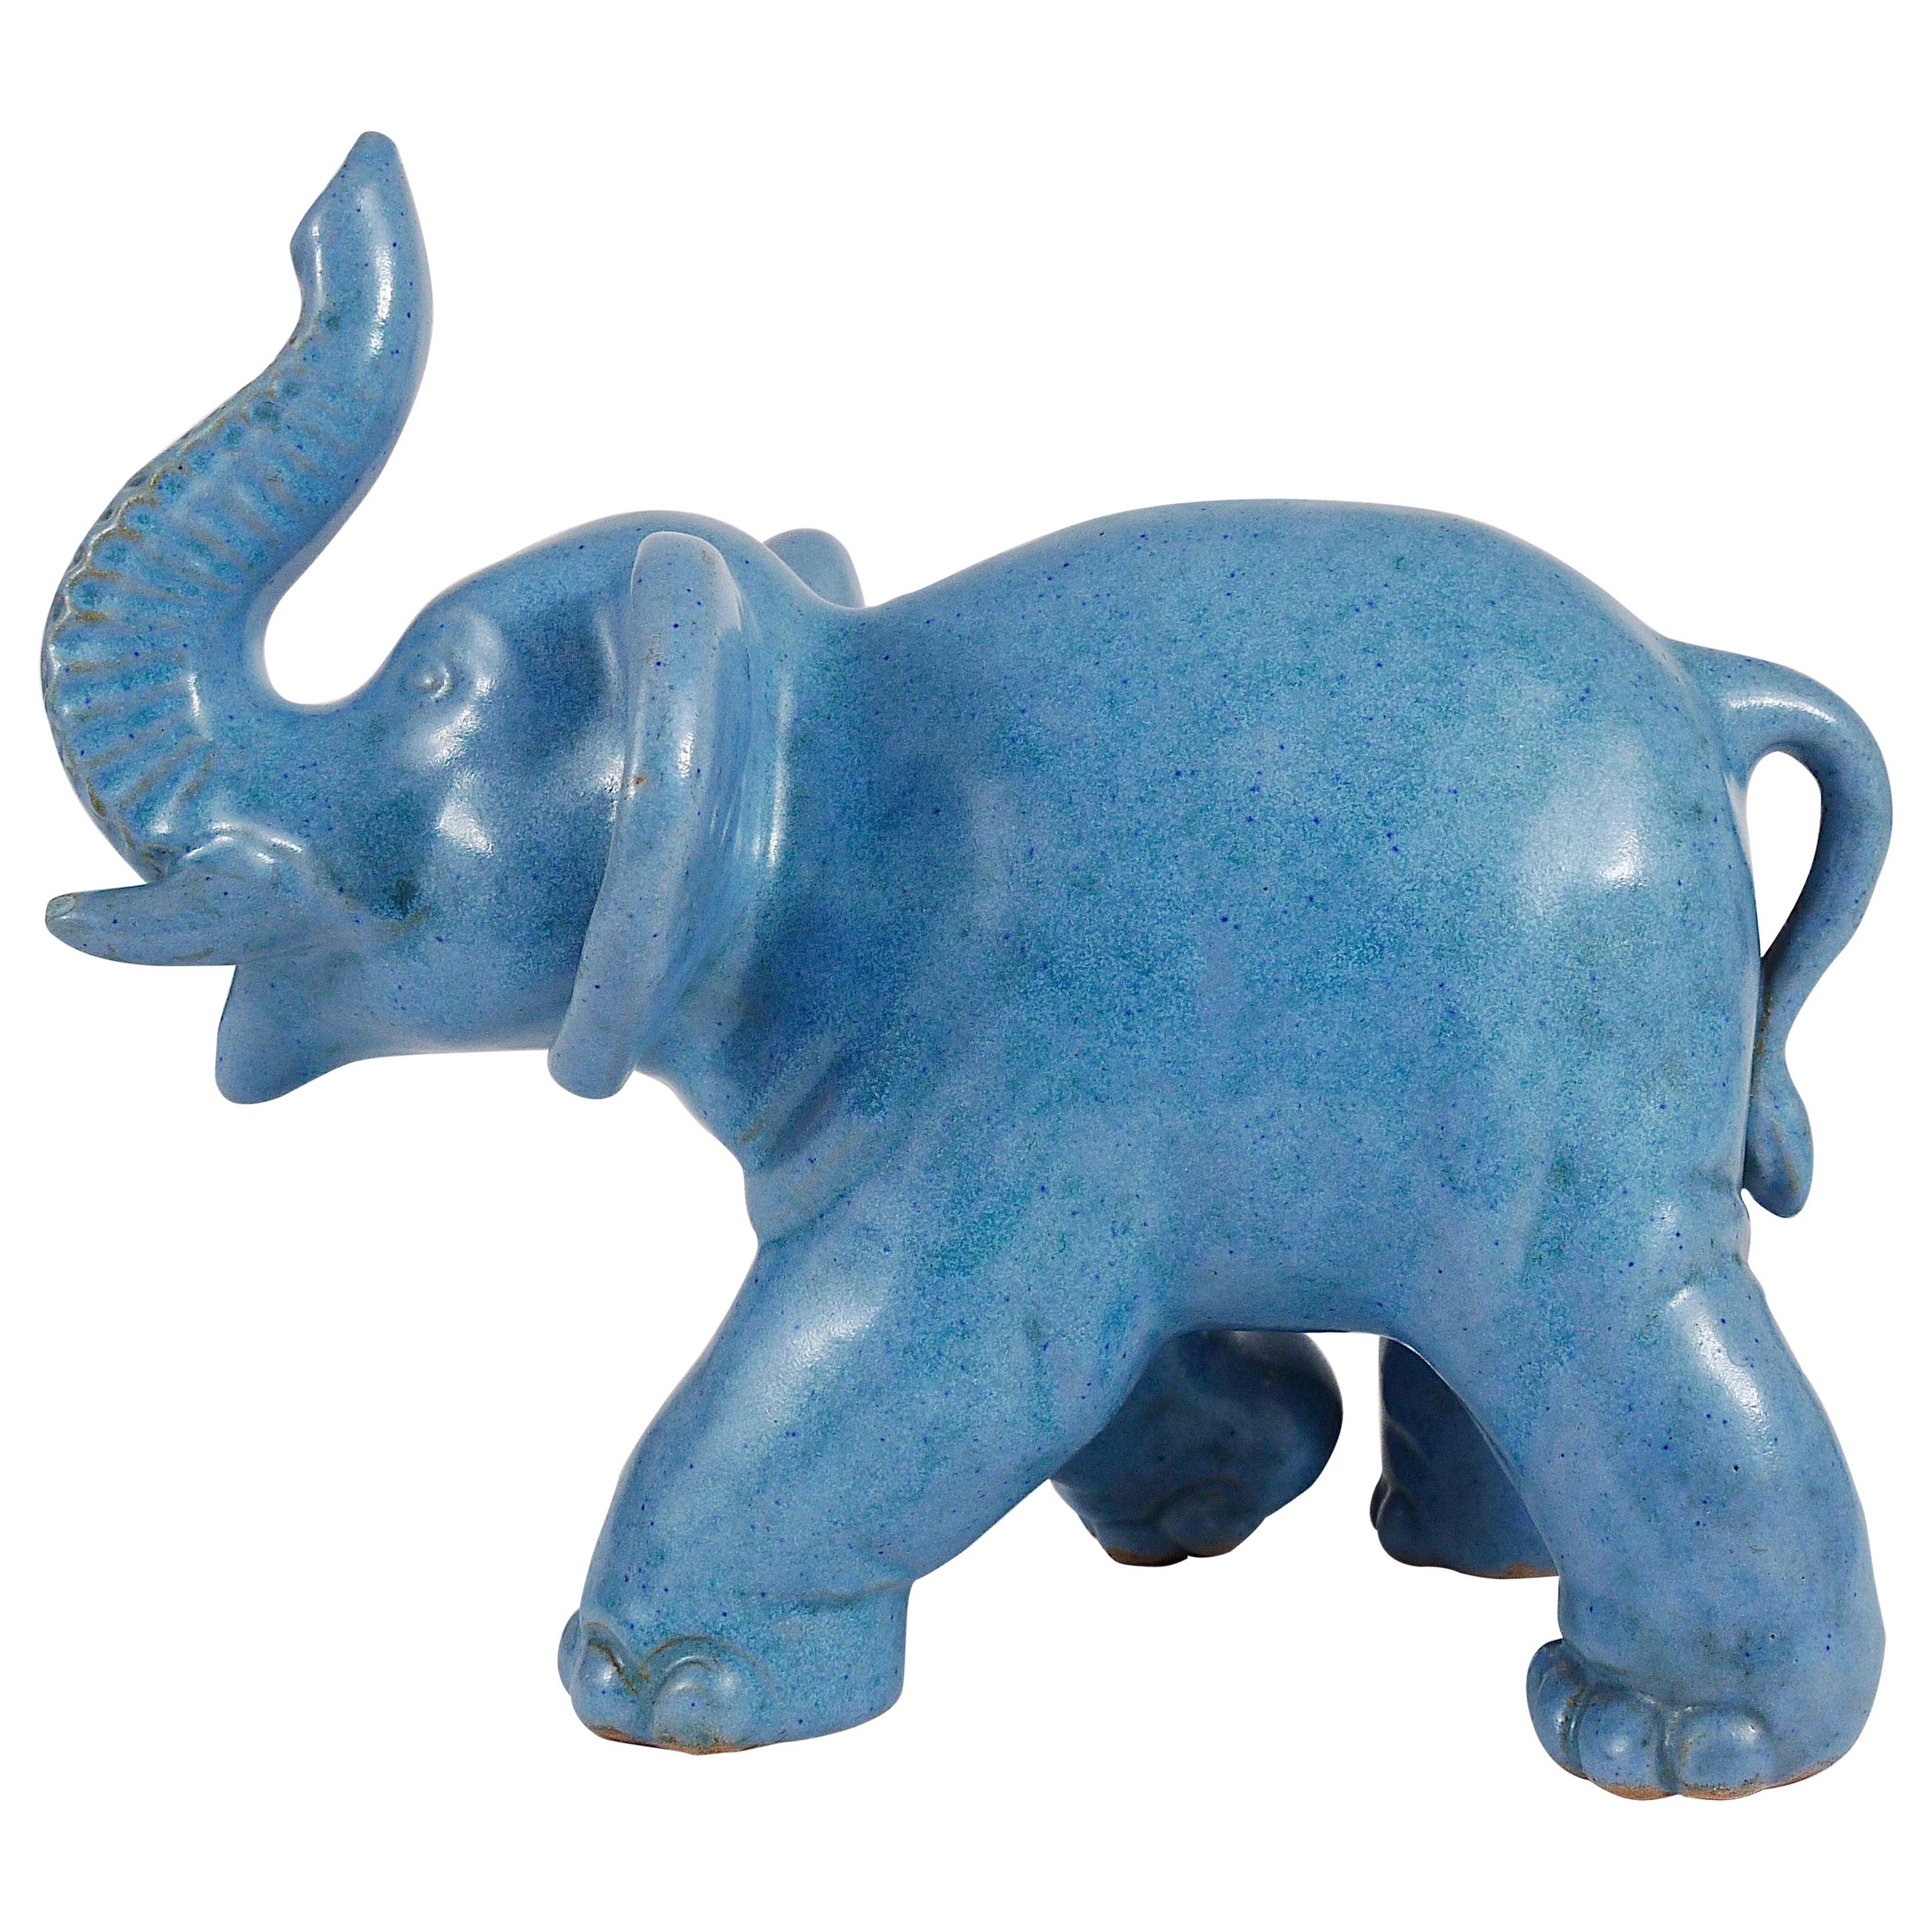 Beautiful 1950s Elephant Pottery Sculpture Figurine by Gmundner Keramik